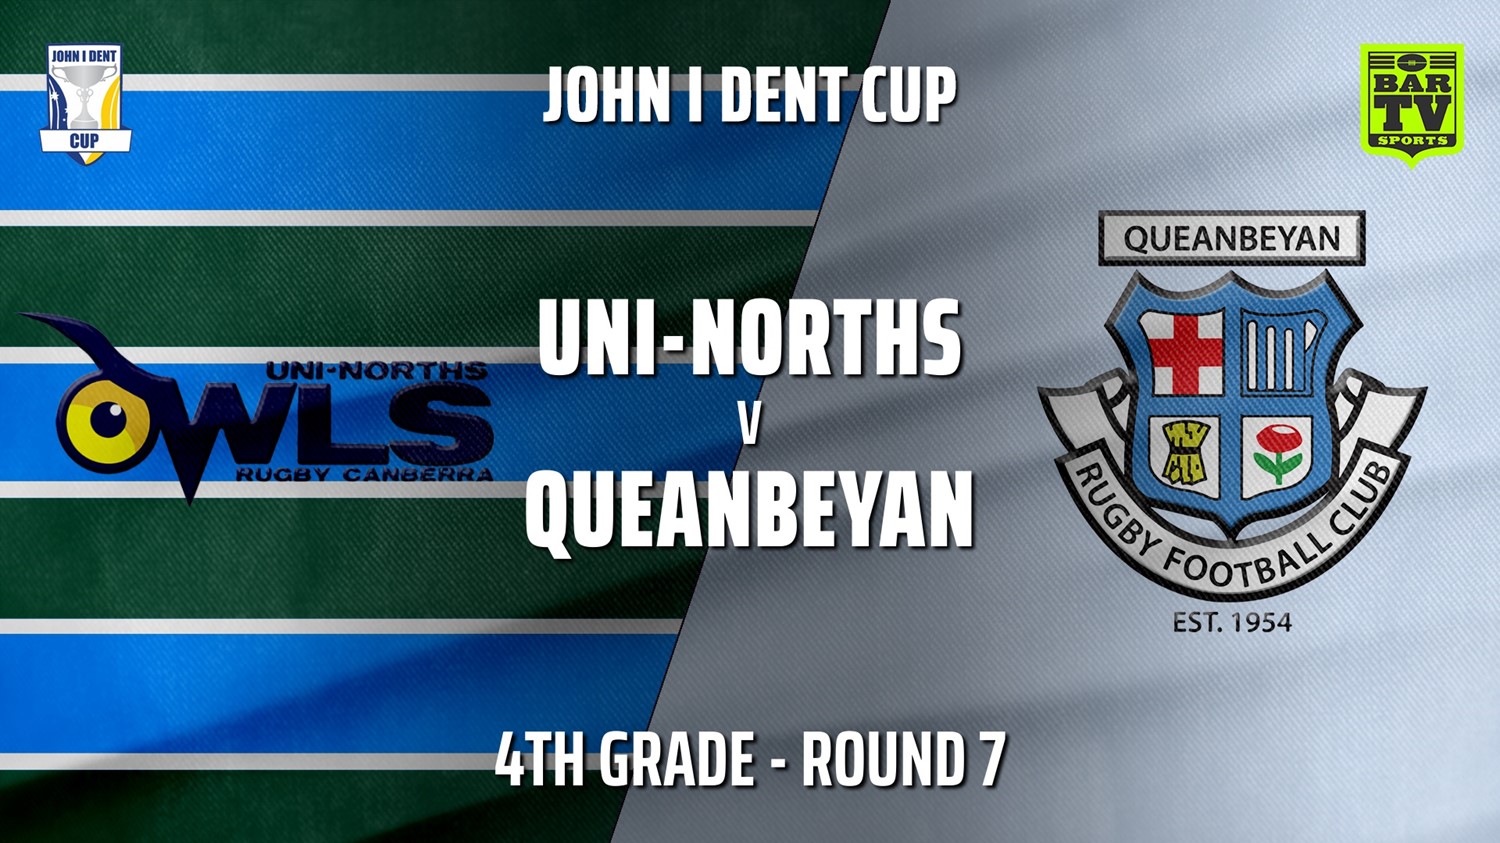 210605-John I Dent (ACT) Round 7 - 4th Grade - UNI-Norths v Queanbeyan Whites Slate Image